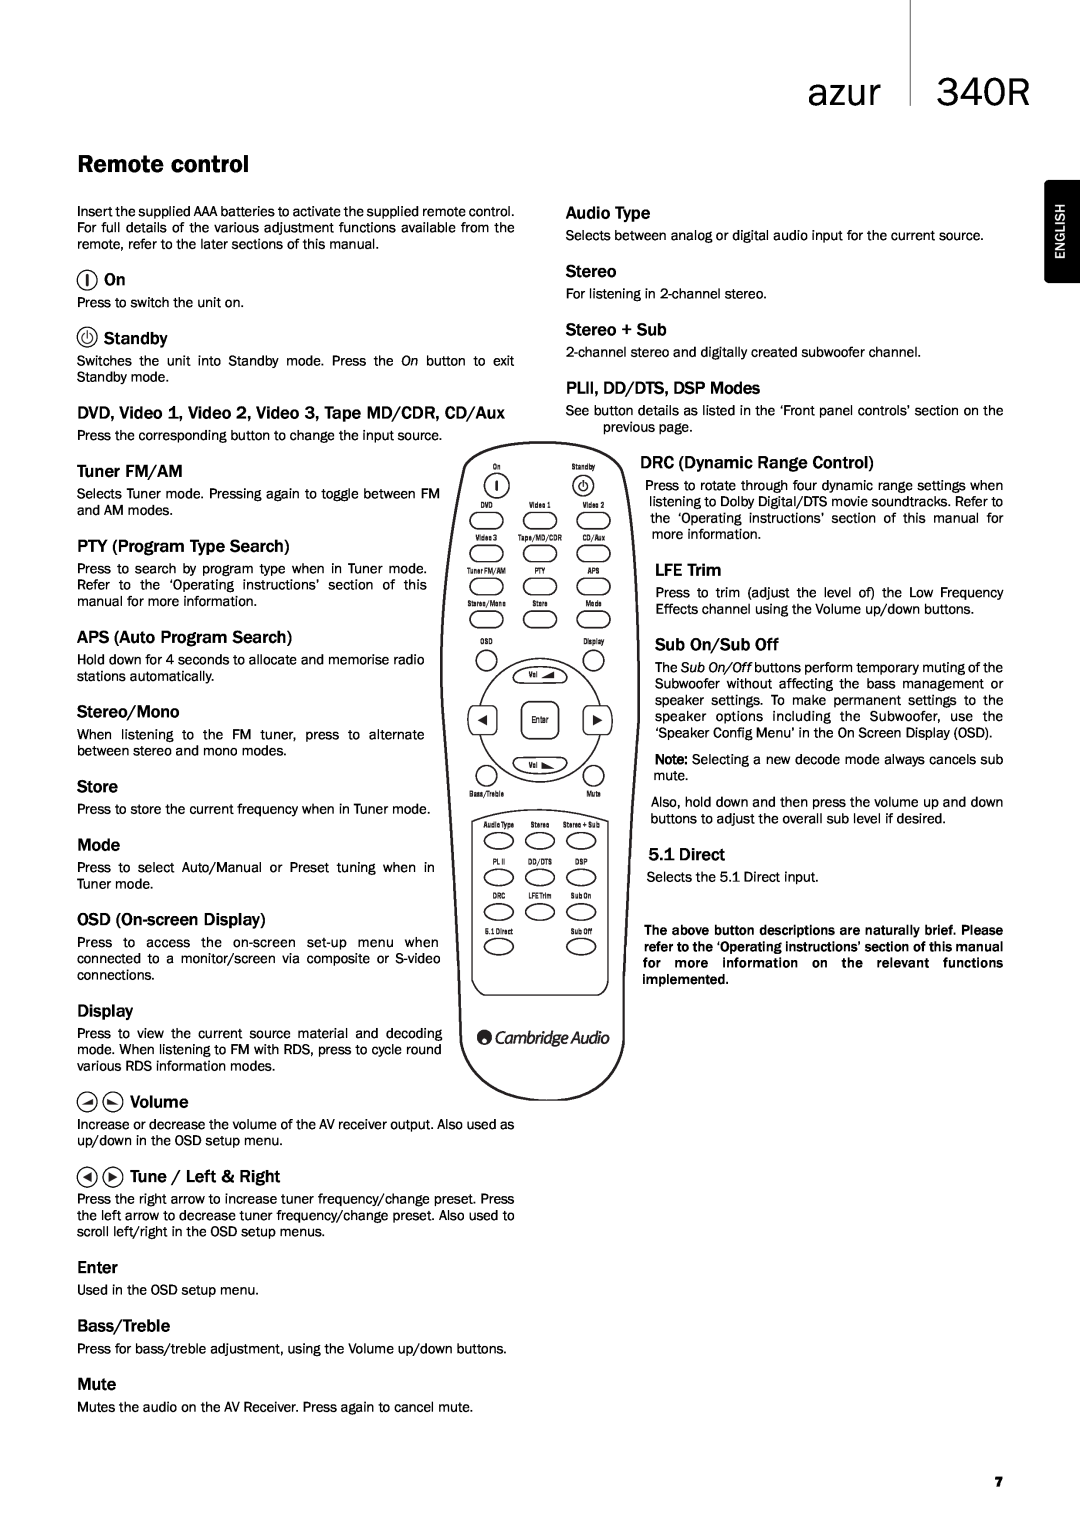 Cambridge Audio 340Razur user manual Remote control, azur 340R 